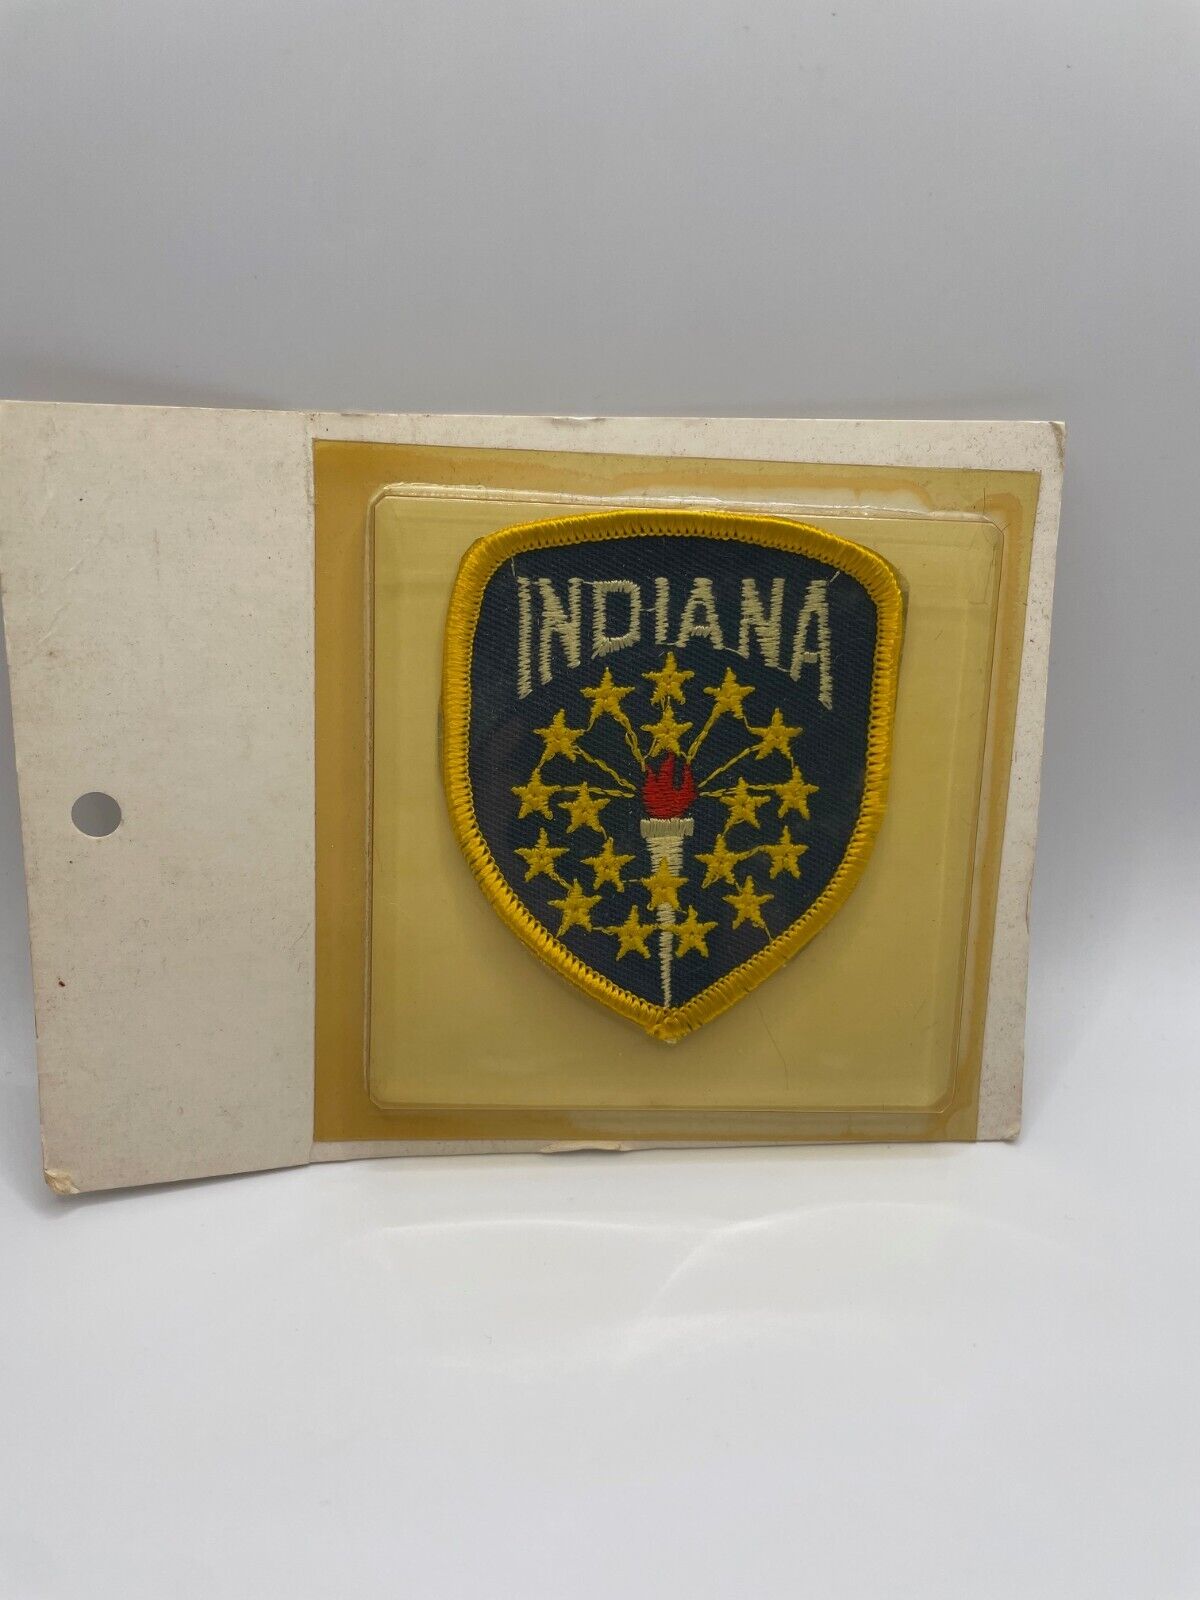 Vintage Indiana Patch